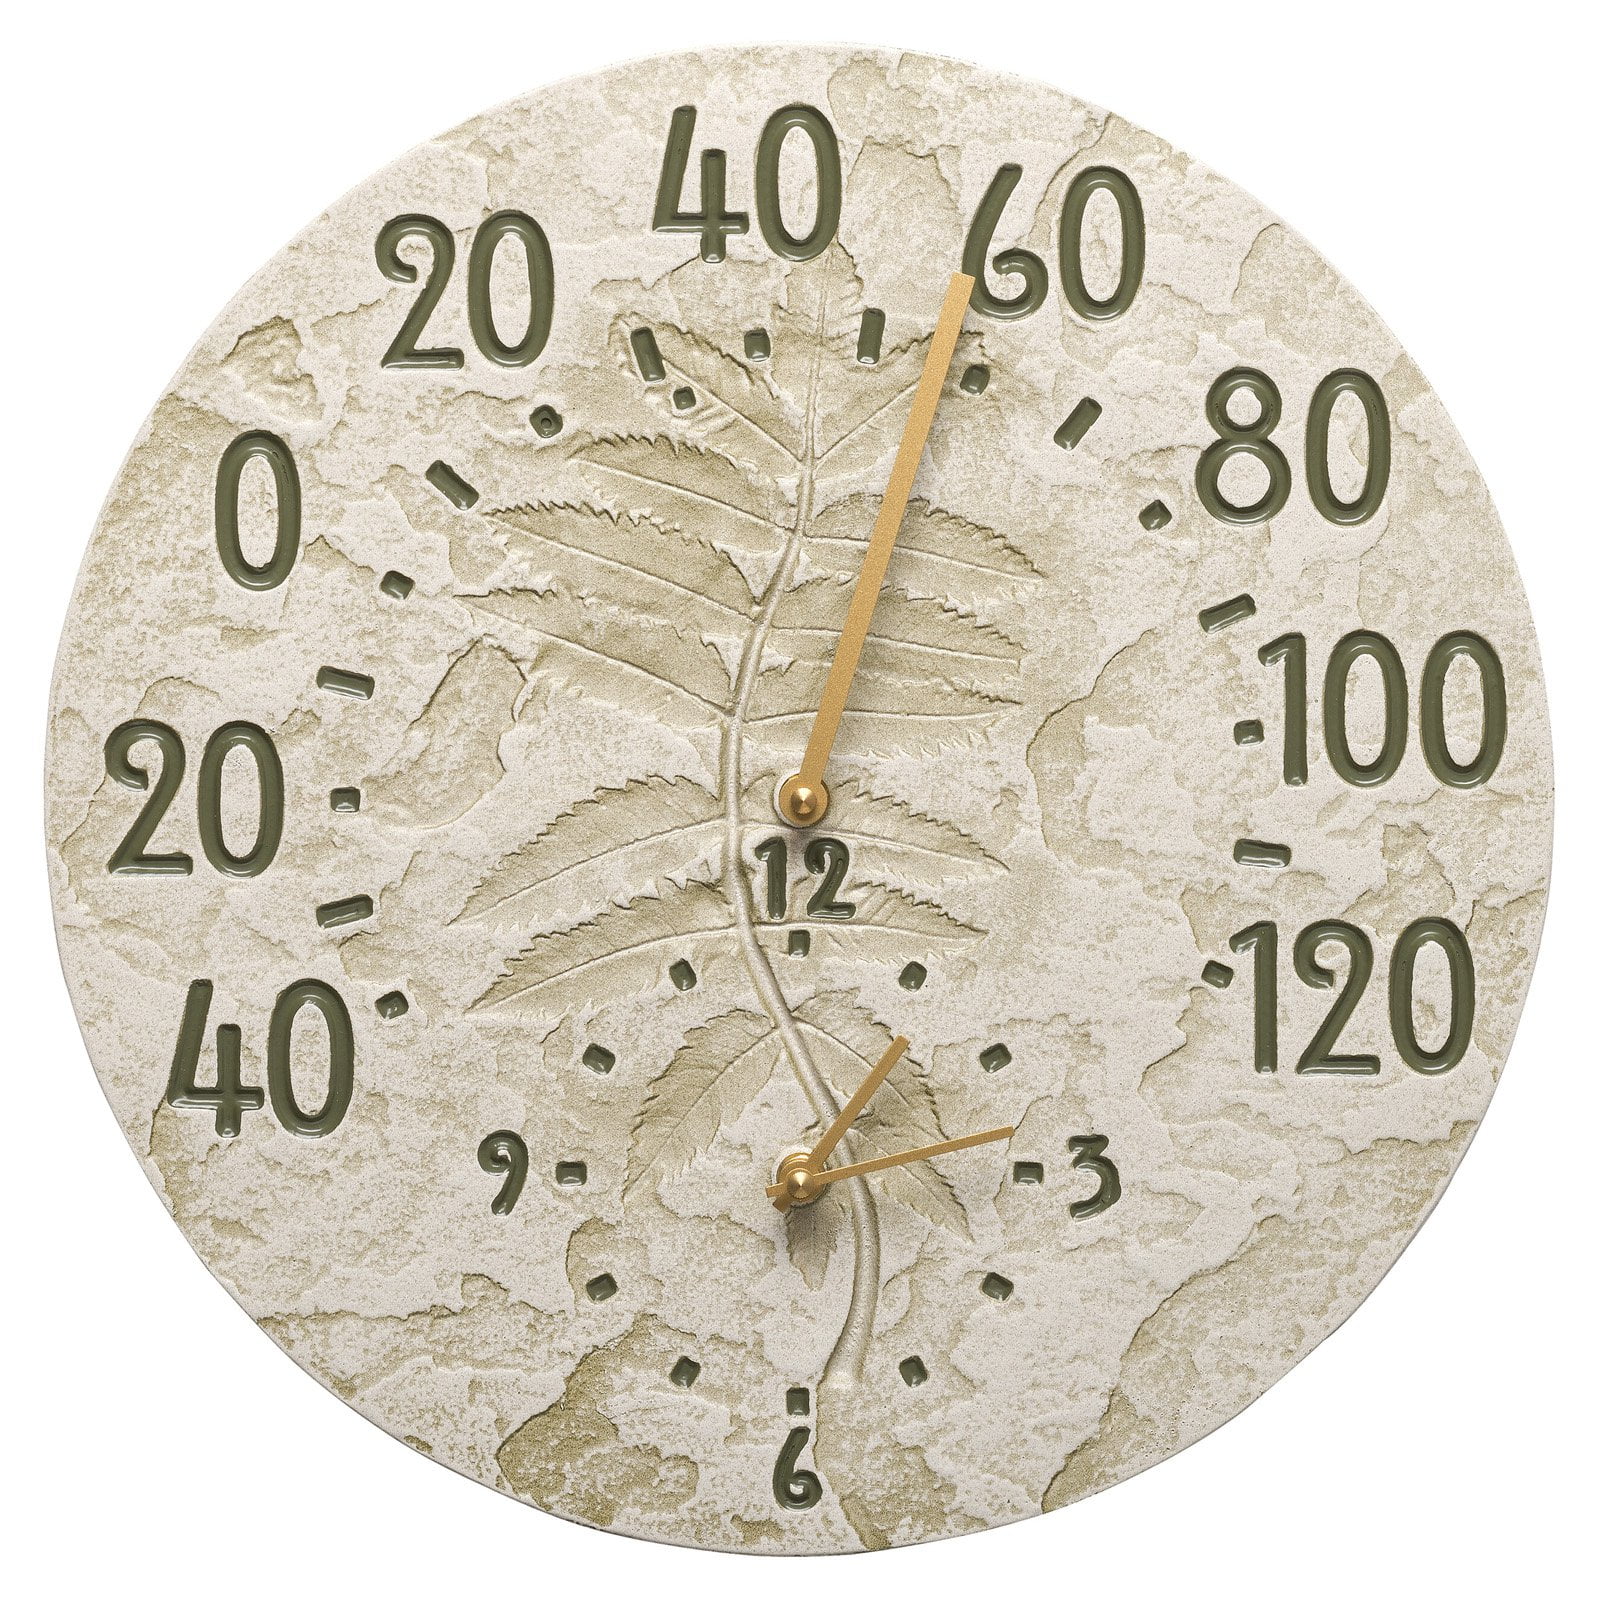 Outdoor Indoor Thermometer Wall Clock Garden Whitehall Weather Resistant 